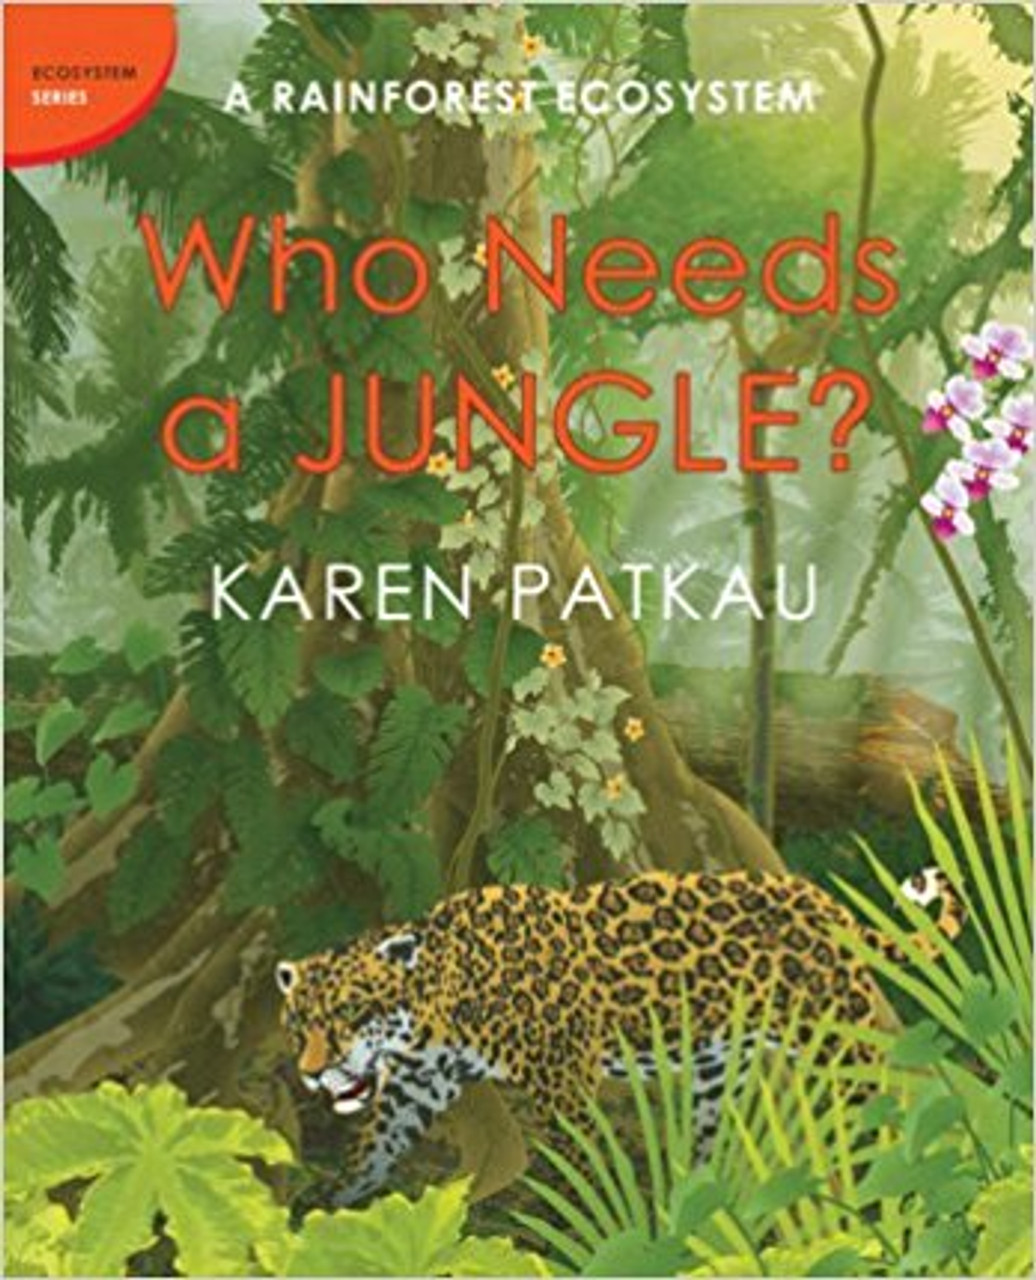 Who Needs a Jungle?: A Rainforest Ecosystem by Karen Patkau